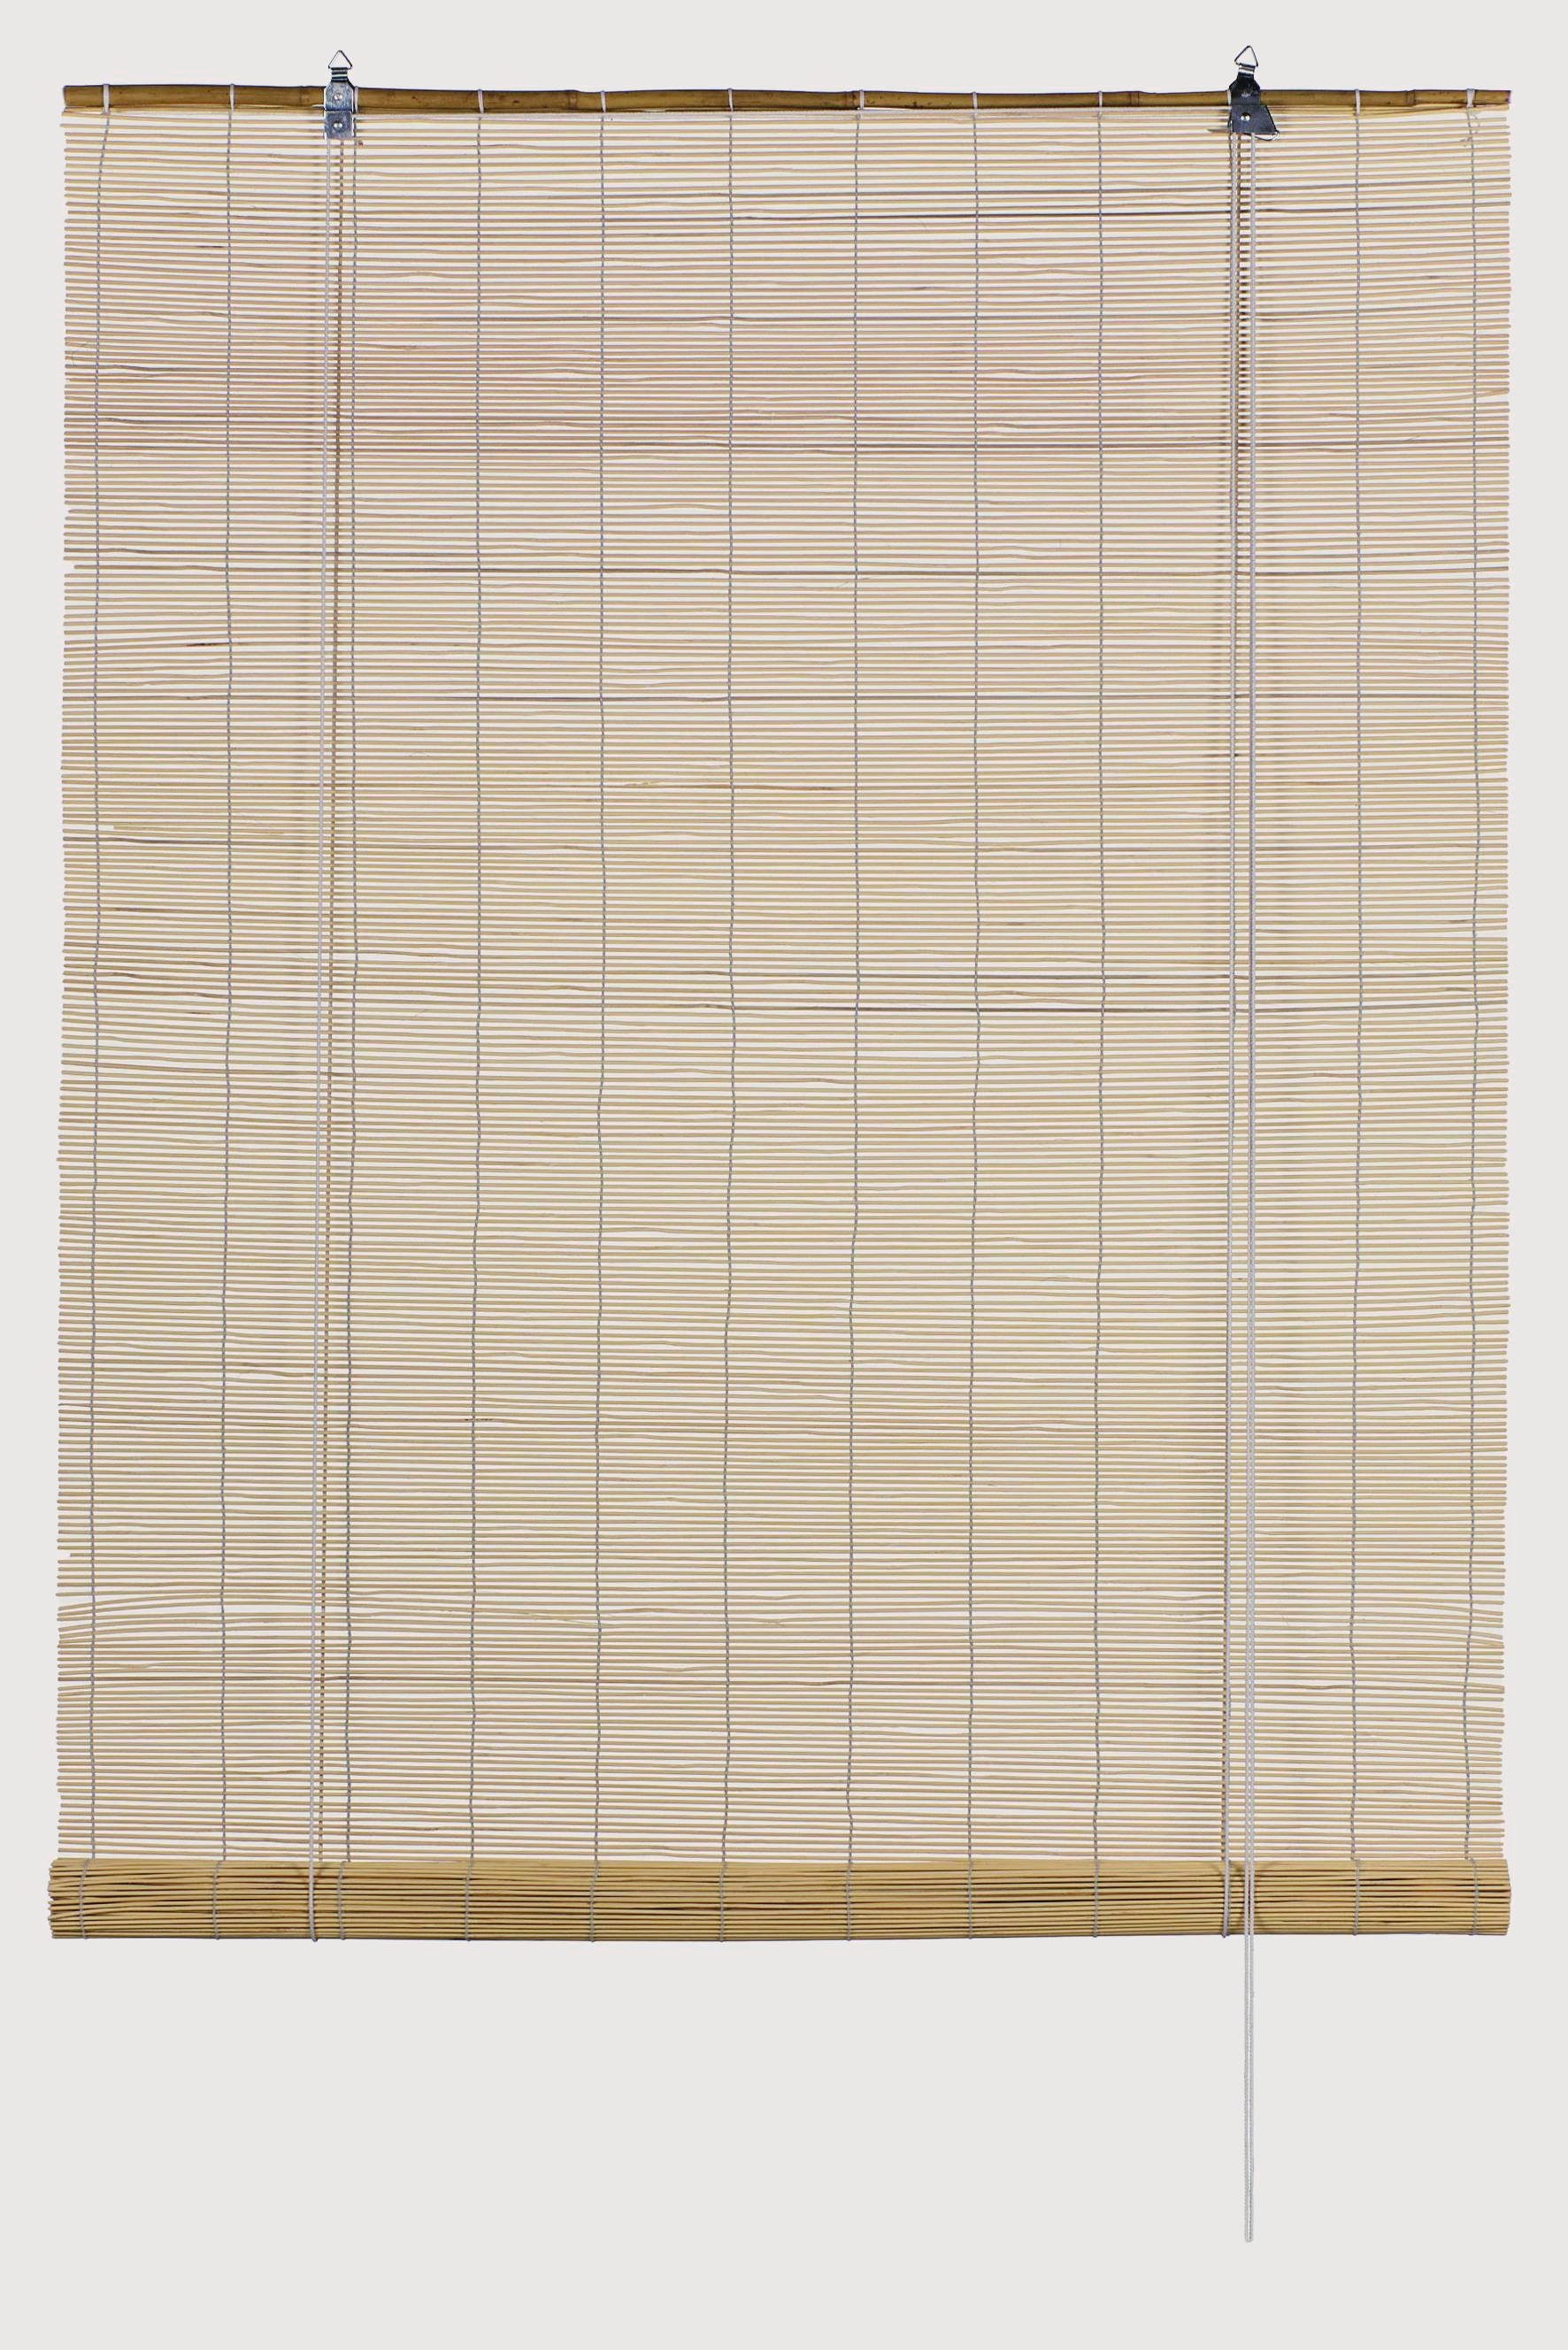 Rollo Gardinia Bambus-Rollo natur 100 x 160 cm, GARDINIA, Lichtschutz, standard